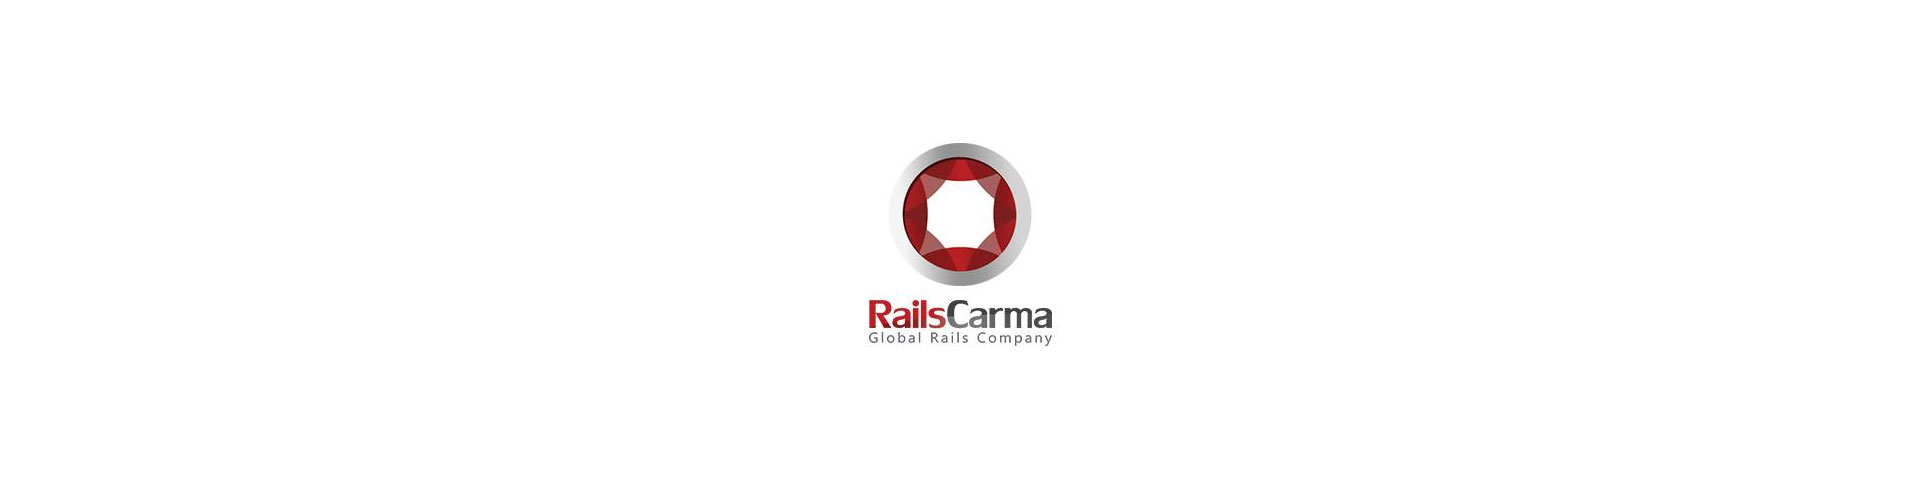 Railscarma